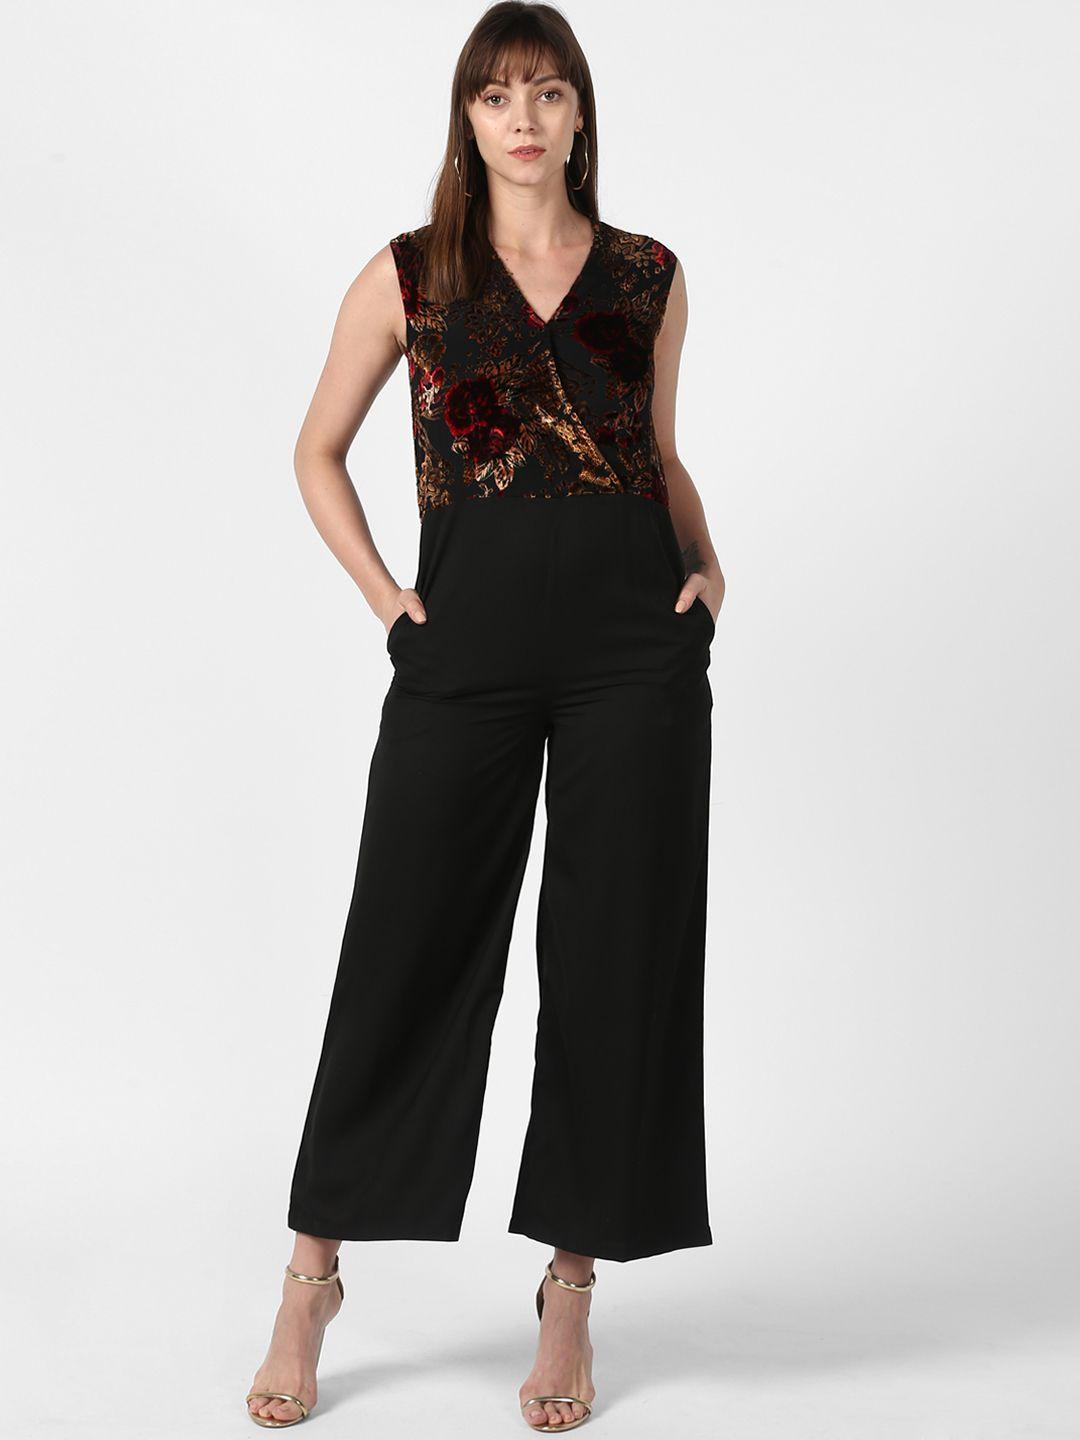 stylestone-women-black-&-red-printed-basic-jumpsuit